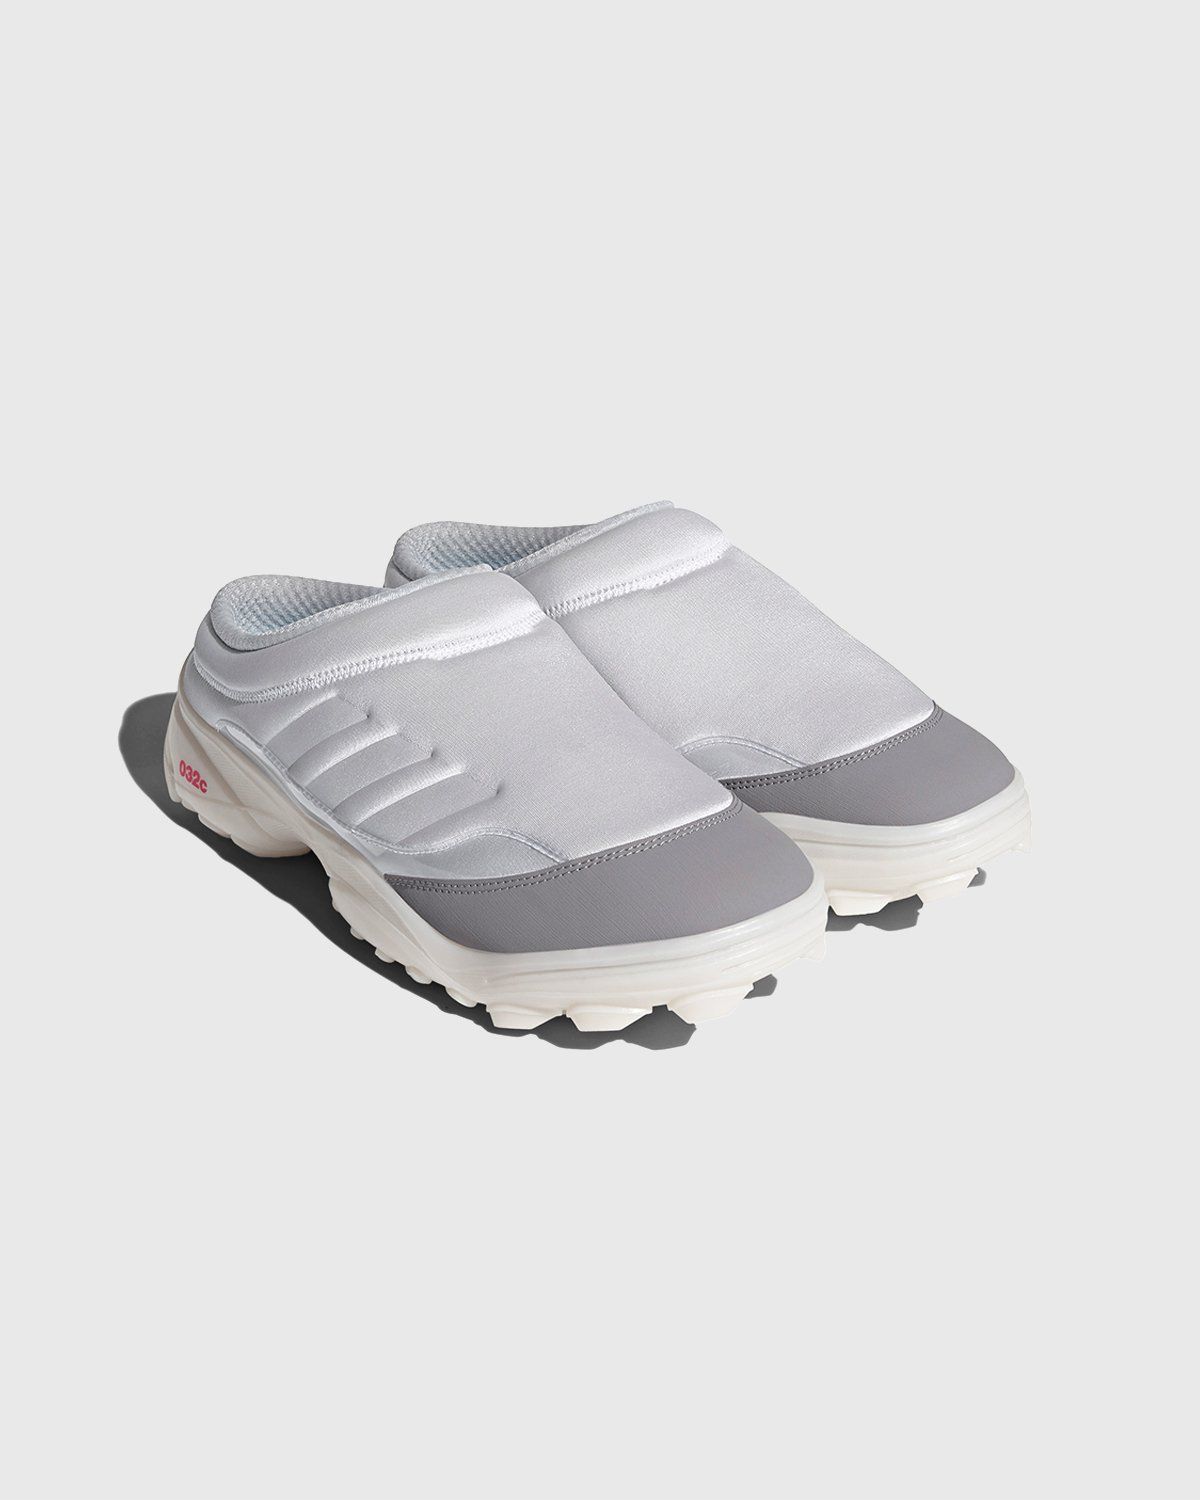 Adidas x 032c – GSG Mule Greone - Shoes - White - Image 3